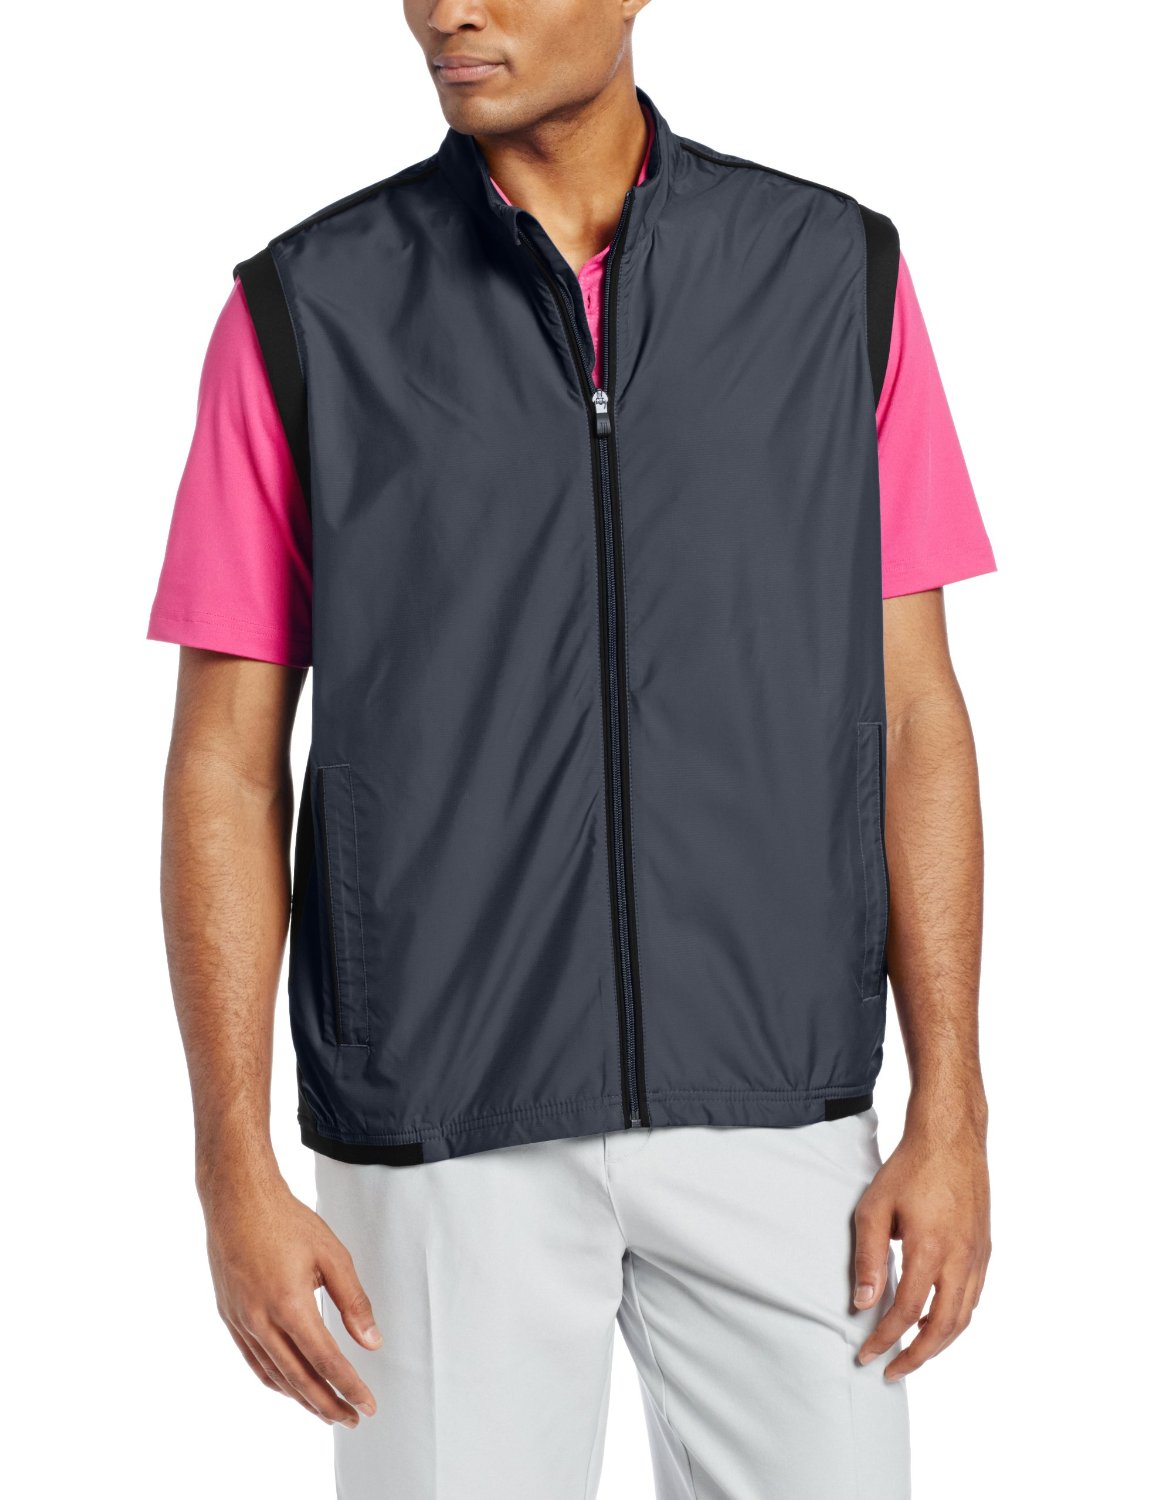 Adidas Mens Climaproof Golf Wind Vests